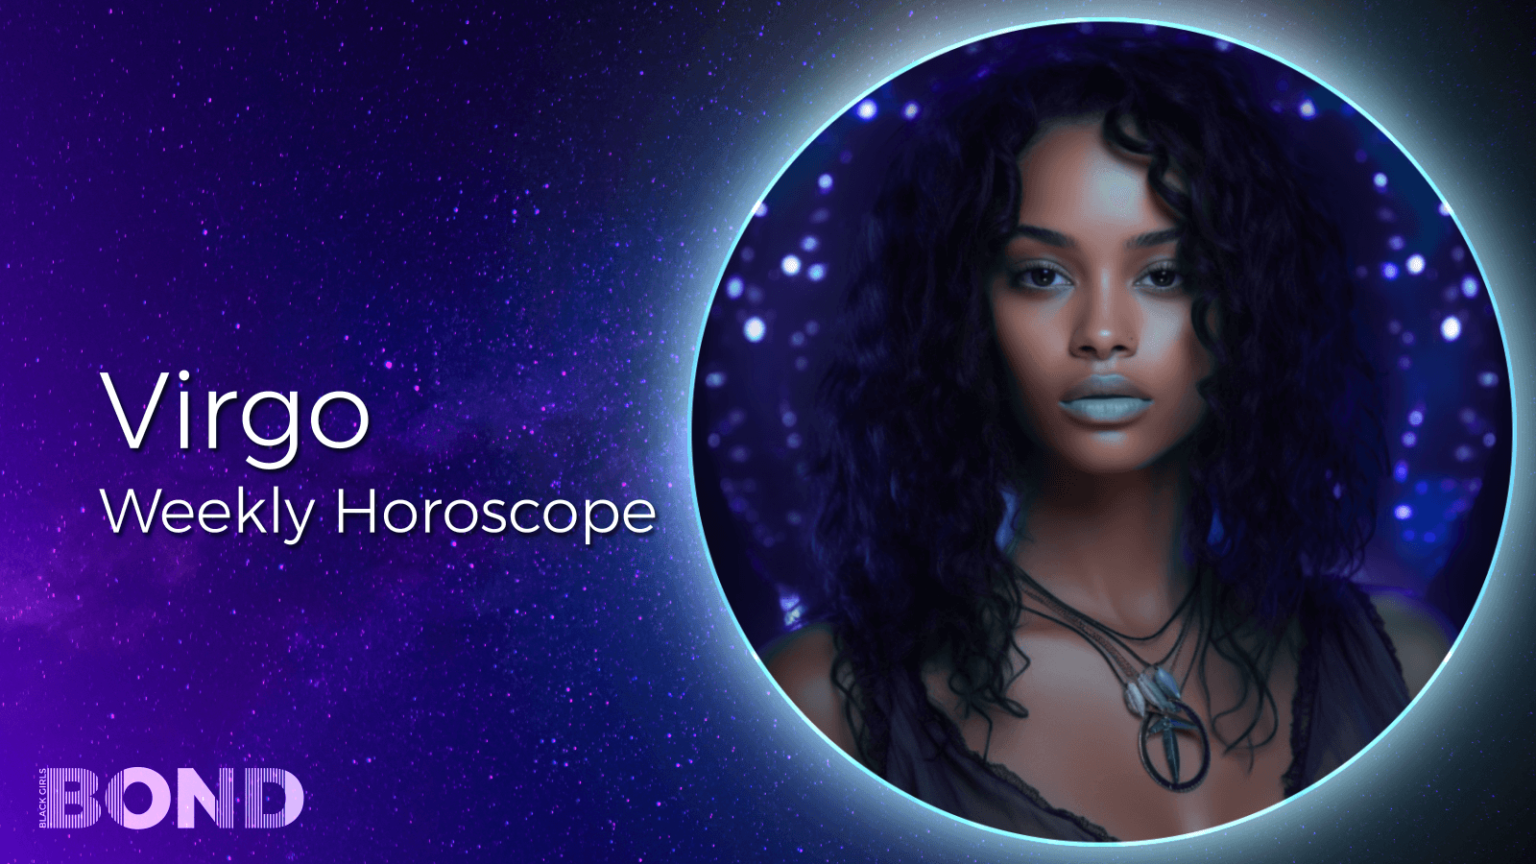 Virgo Weekly Horoscope